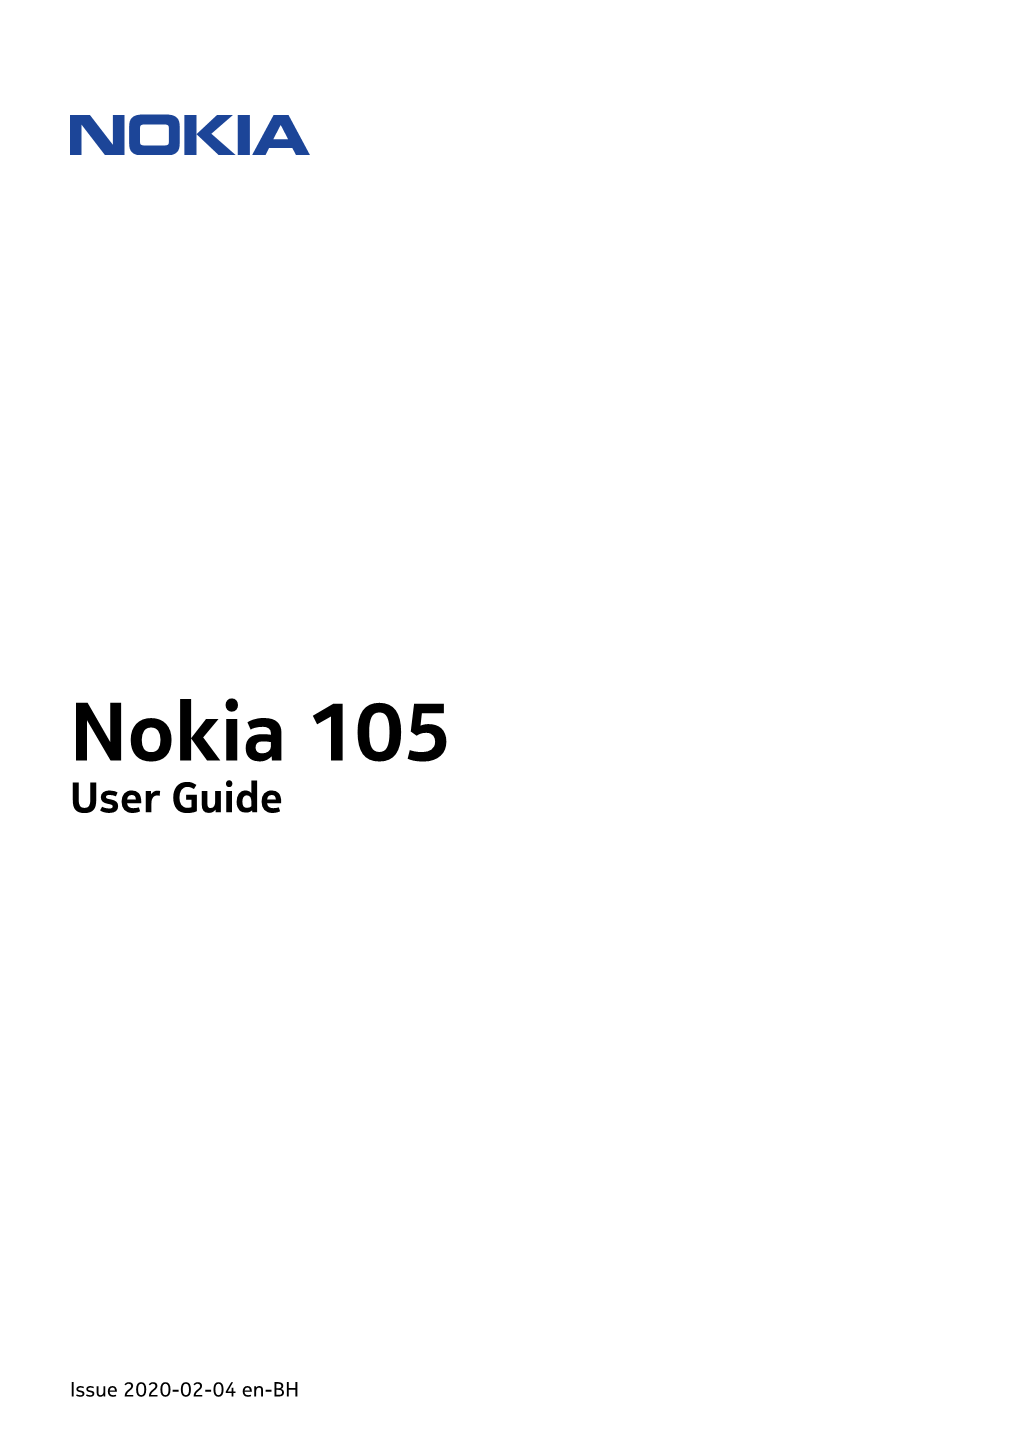 Nokia 105 User Guide Pdfdisplaydoctitle=True Pdflang=En